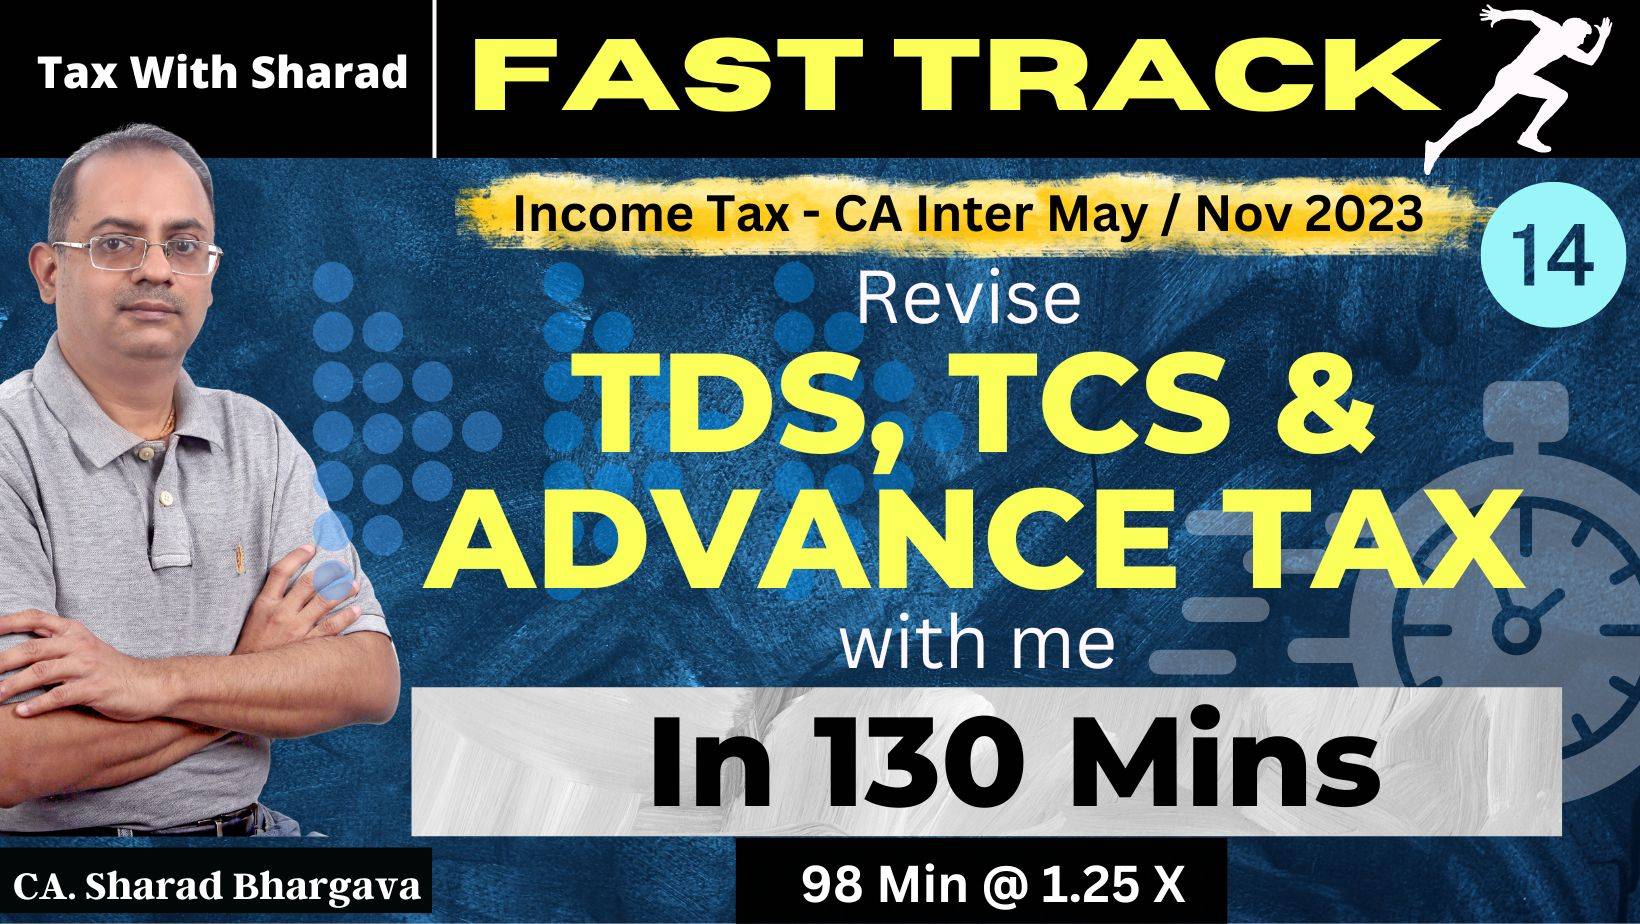 Fast Track Revision (DT) / 14 - TDS, TCS, Advance Tax / CA Inter May/ Nov 2023 / CA. Sharad Bhargava